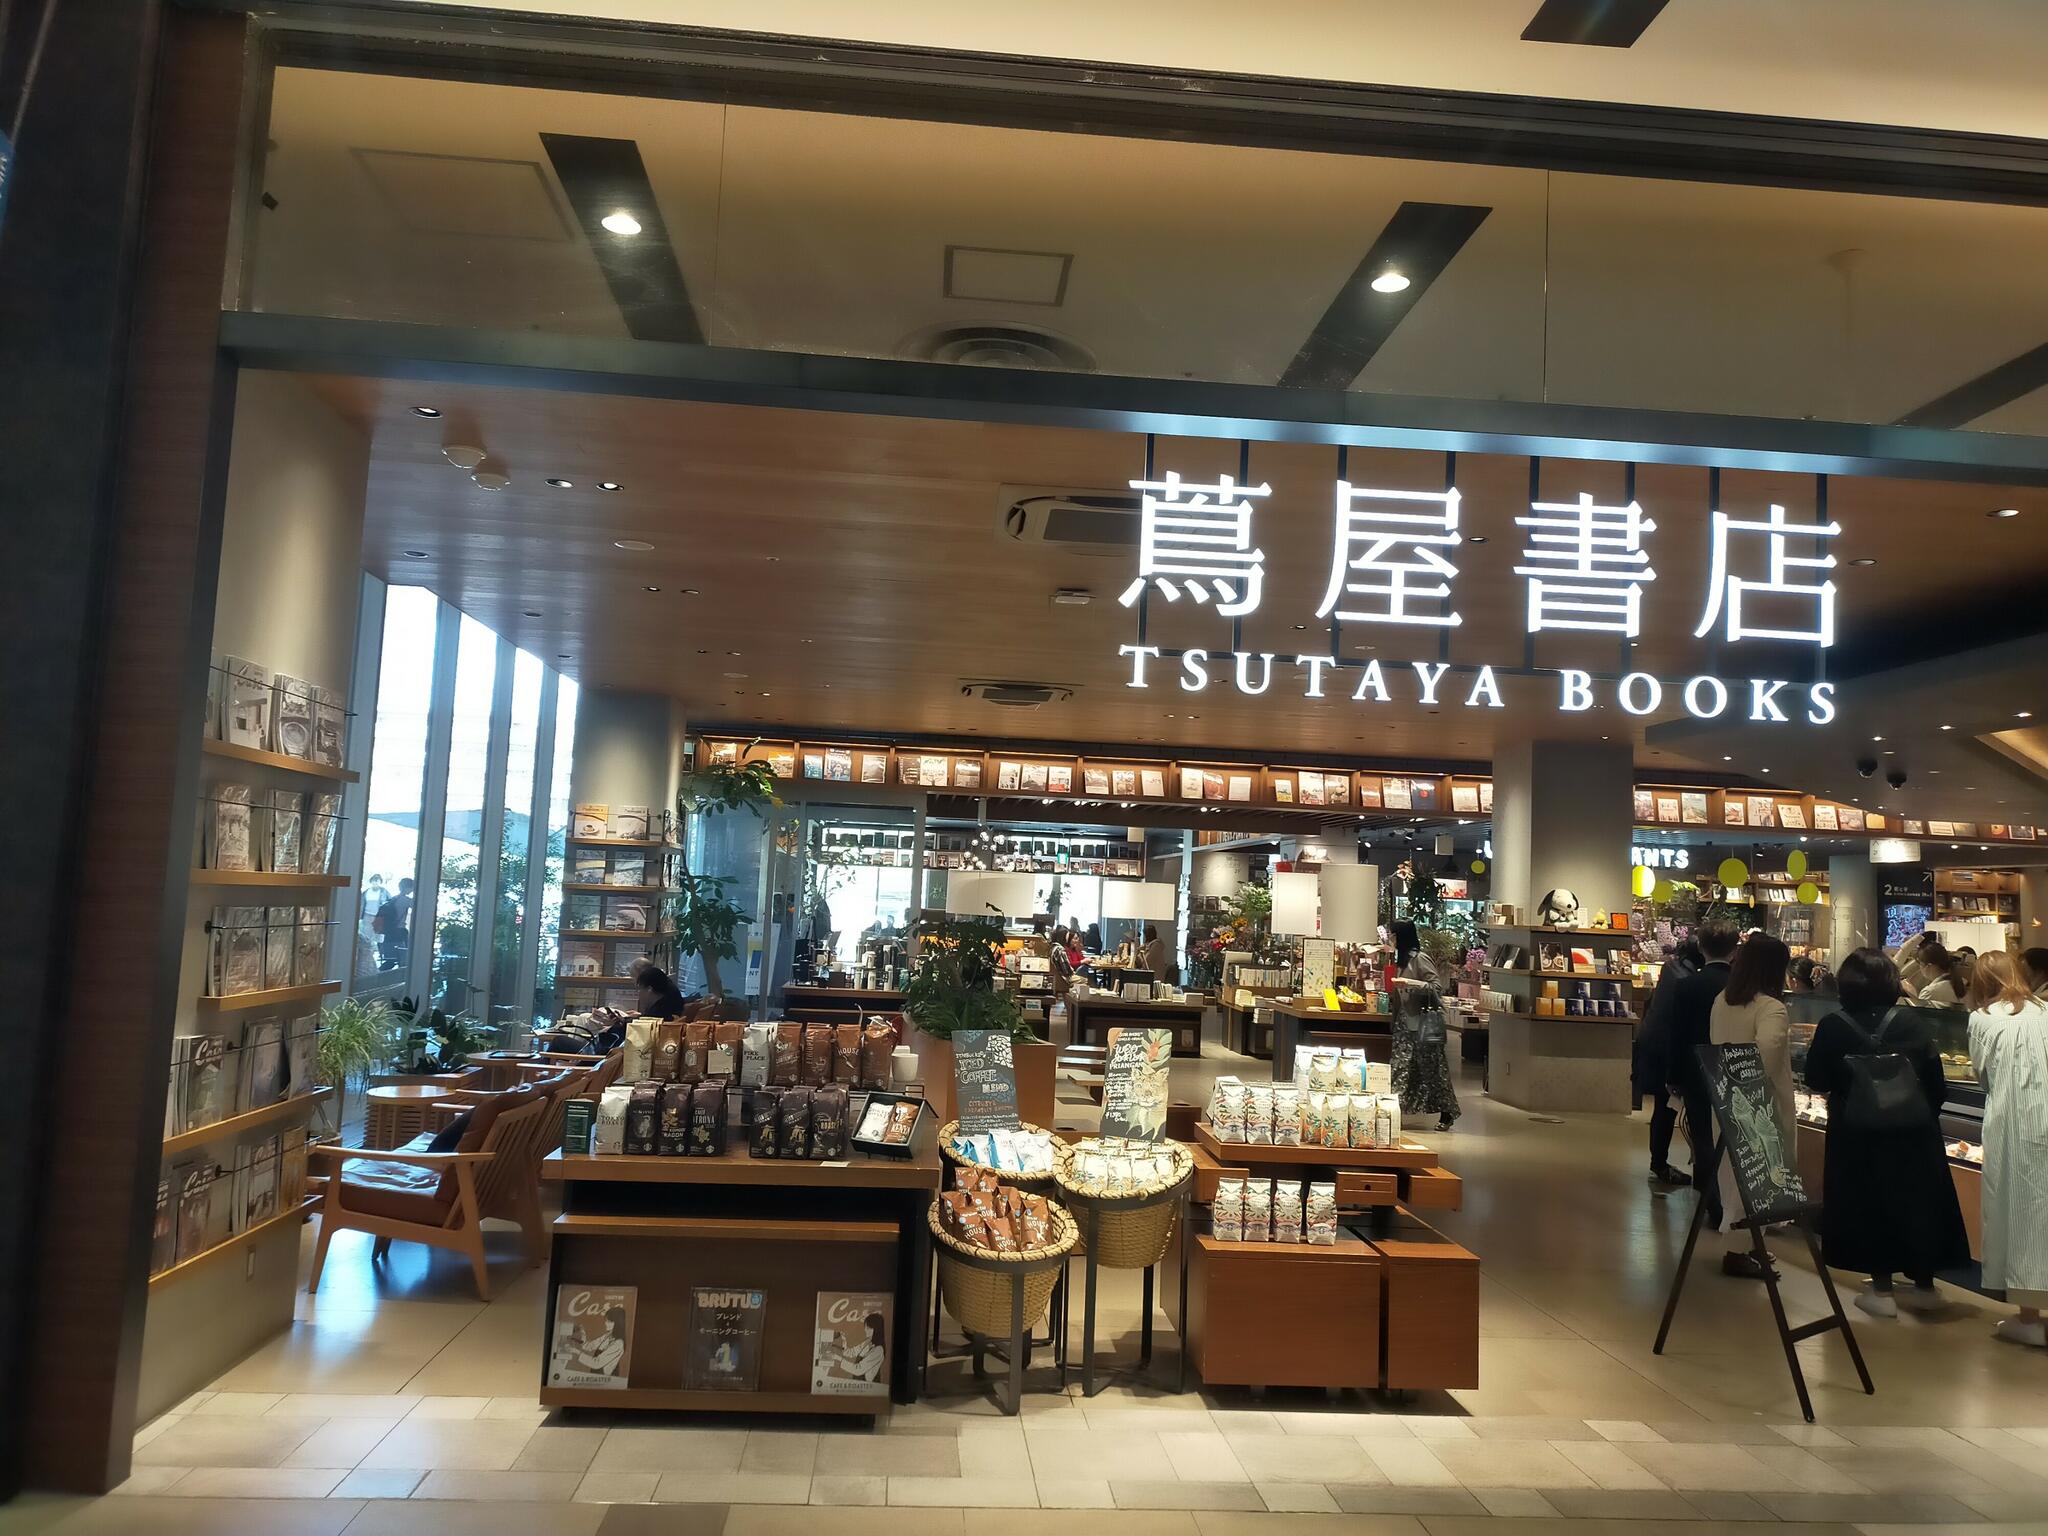 TSUTAYA BOOK 広島 蔦屋書店の代表写真1